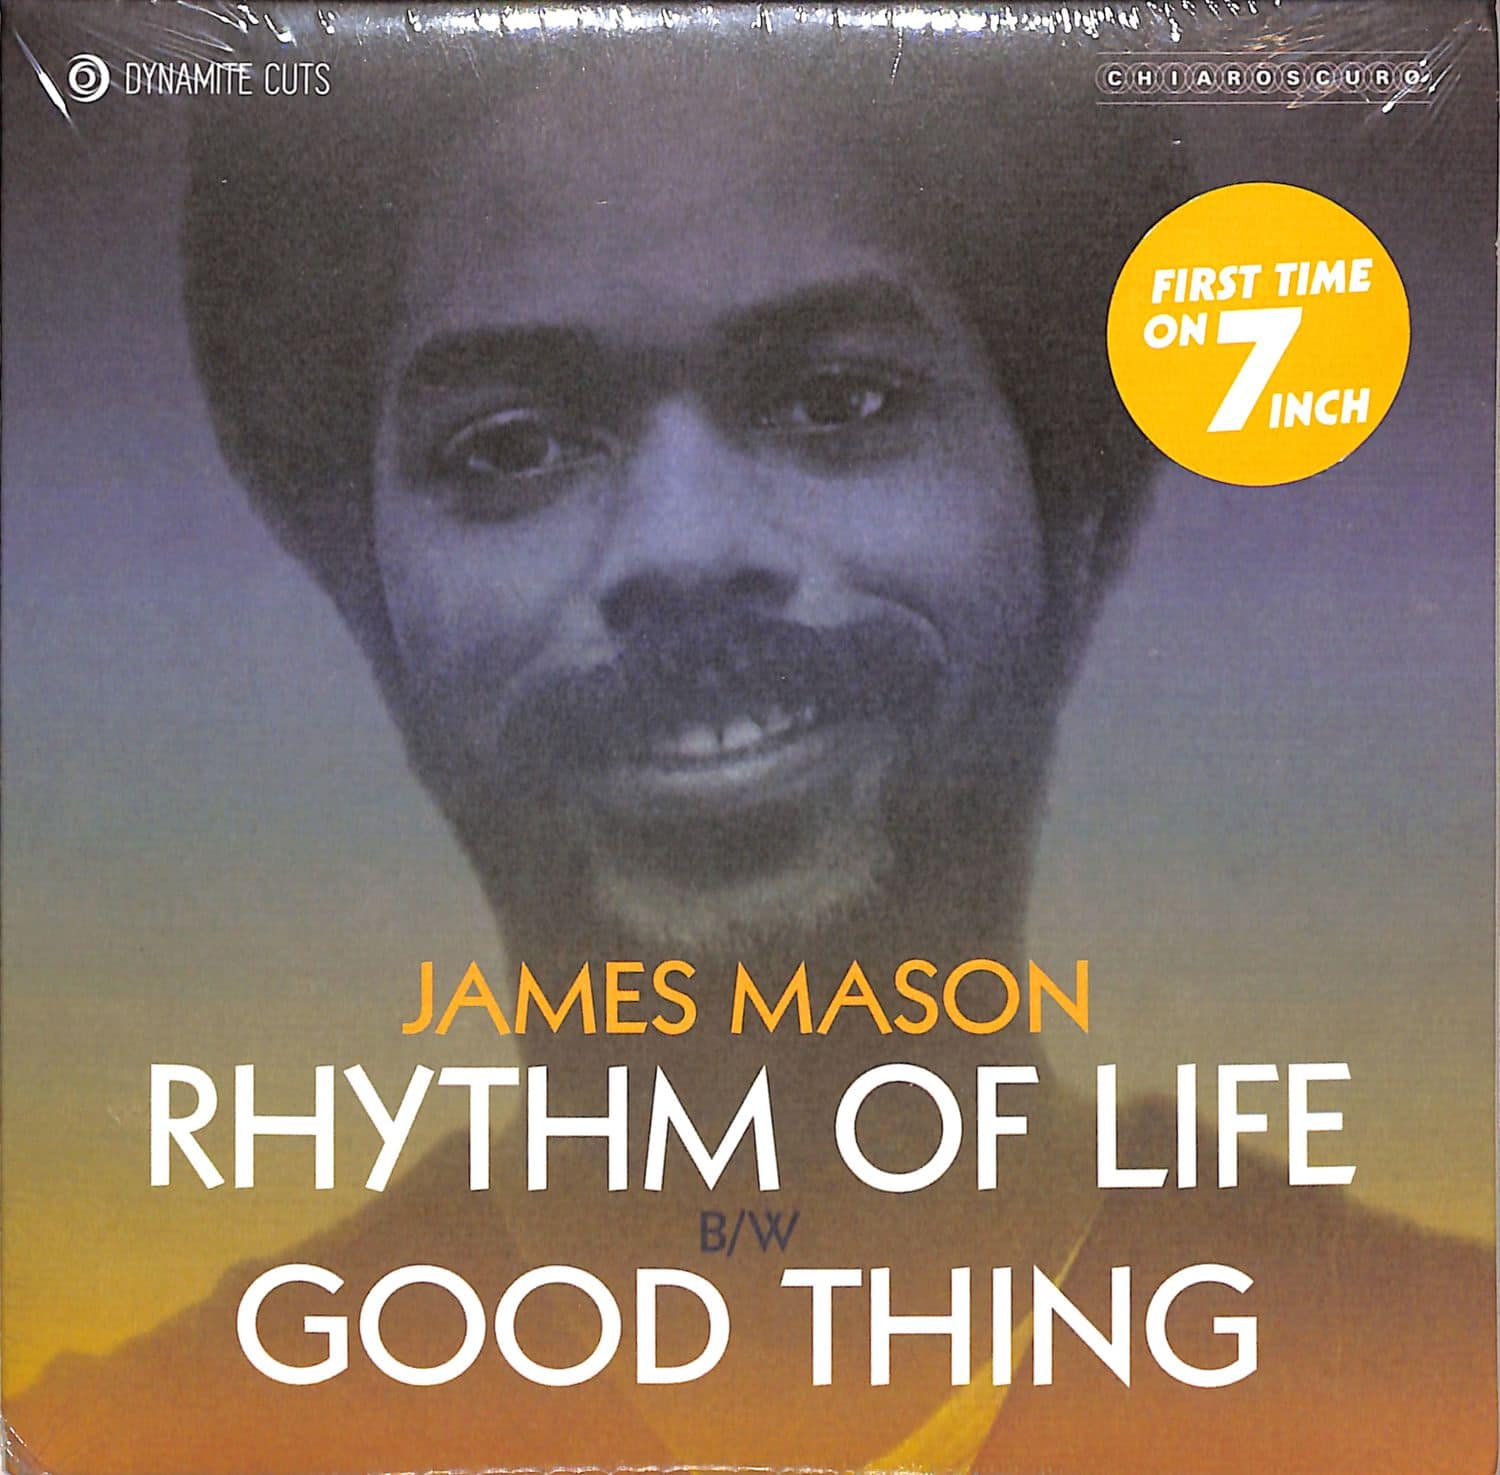 James Mason - RHYTHM OF LIFE / GOOD THING 